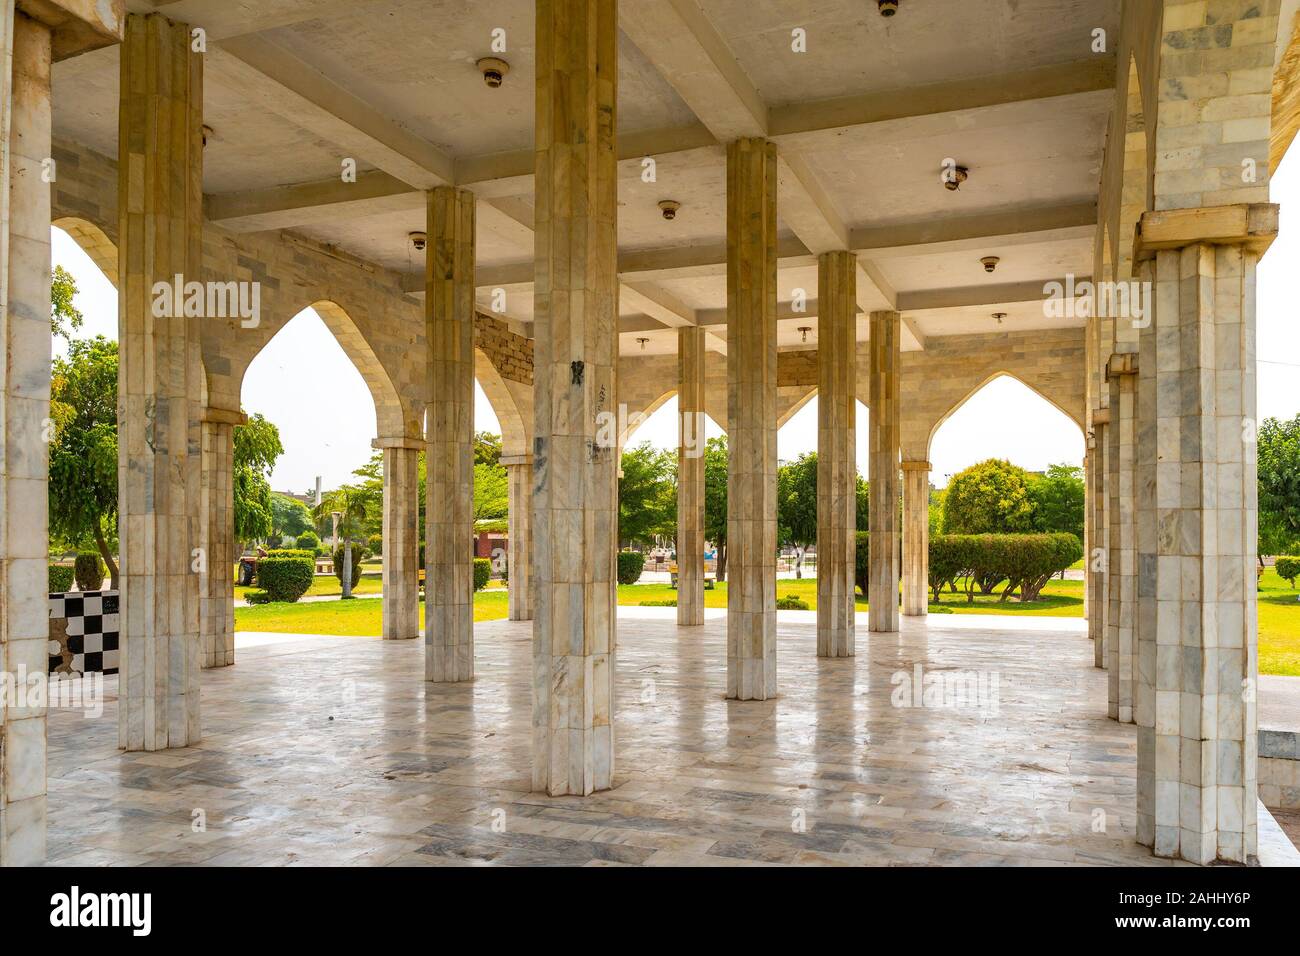 Multan Shah Shams Park Picturesque Breathtaking View of a Pavilion on a ...